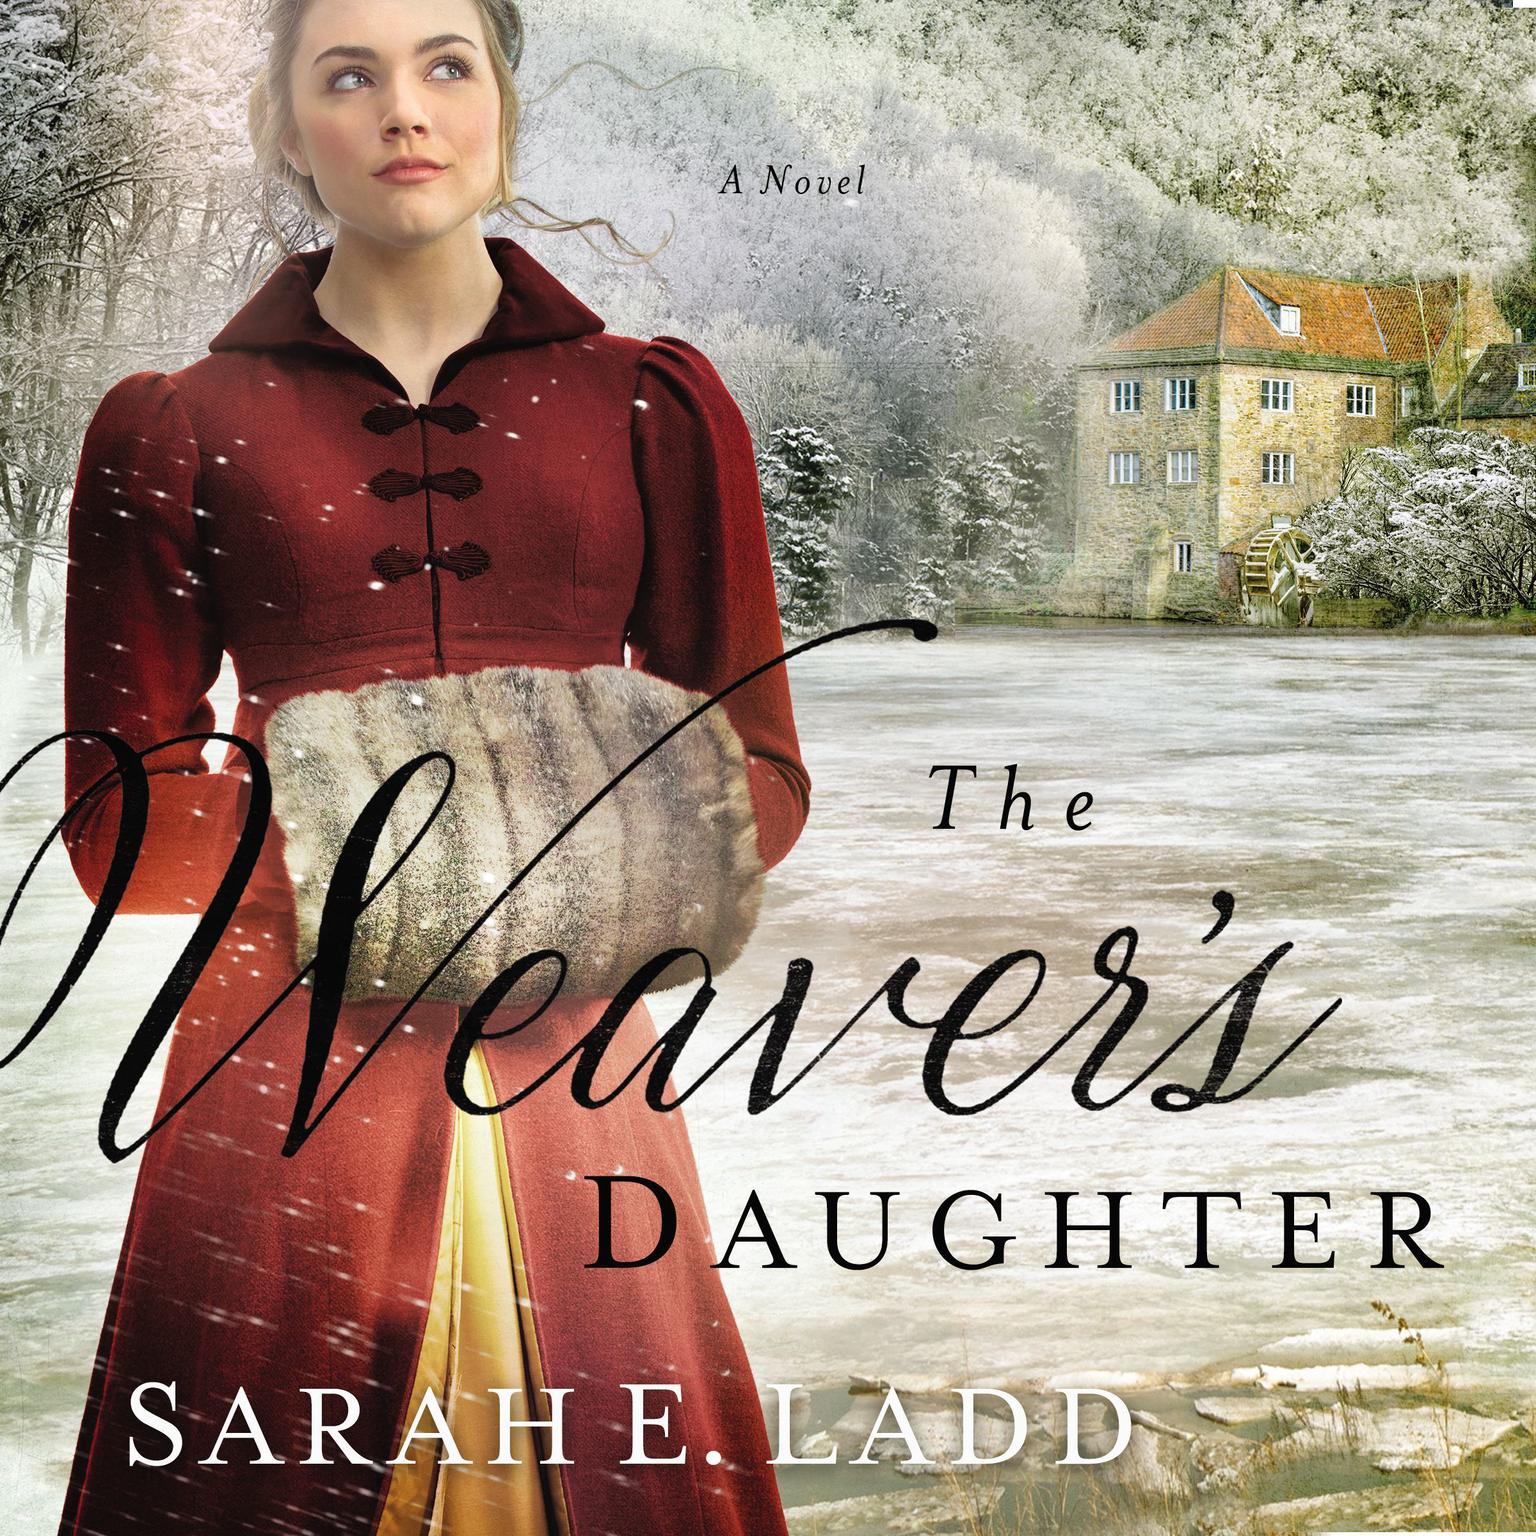 The Weavers Daughter: A Regency Romance Novel Audiobook, by Sarah E. Ladd